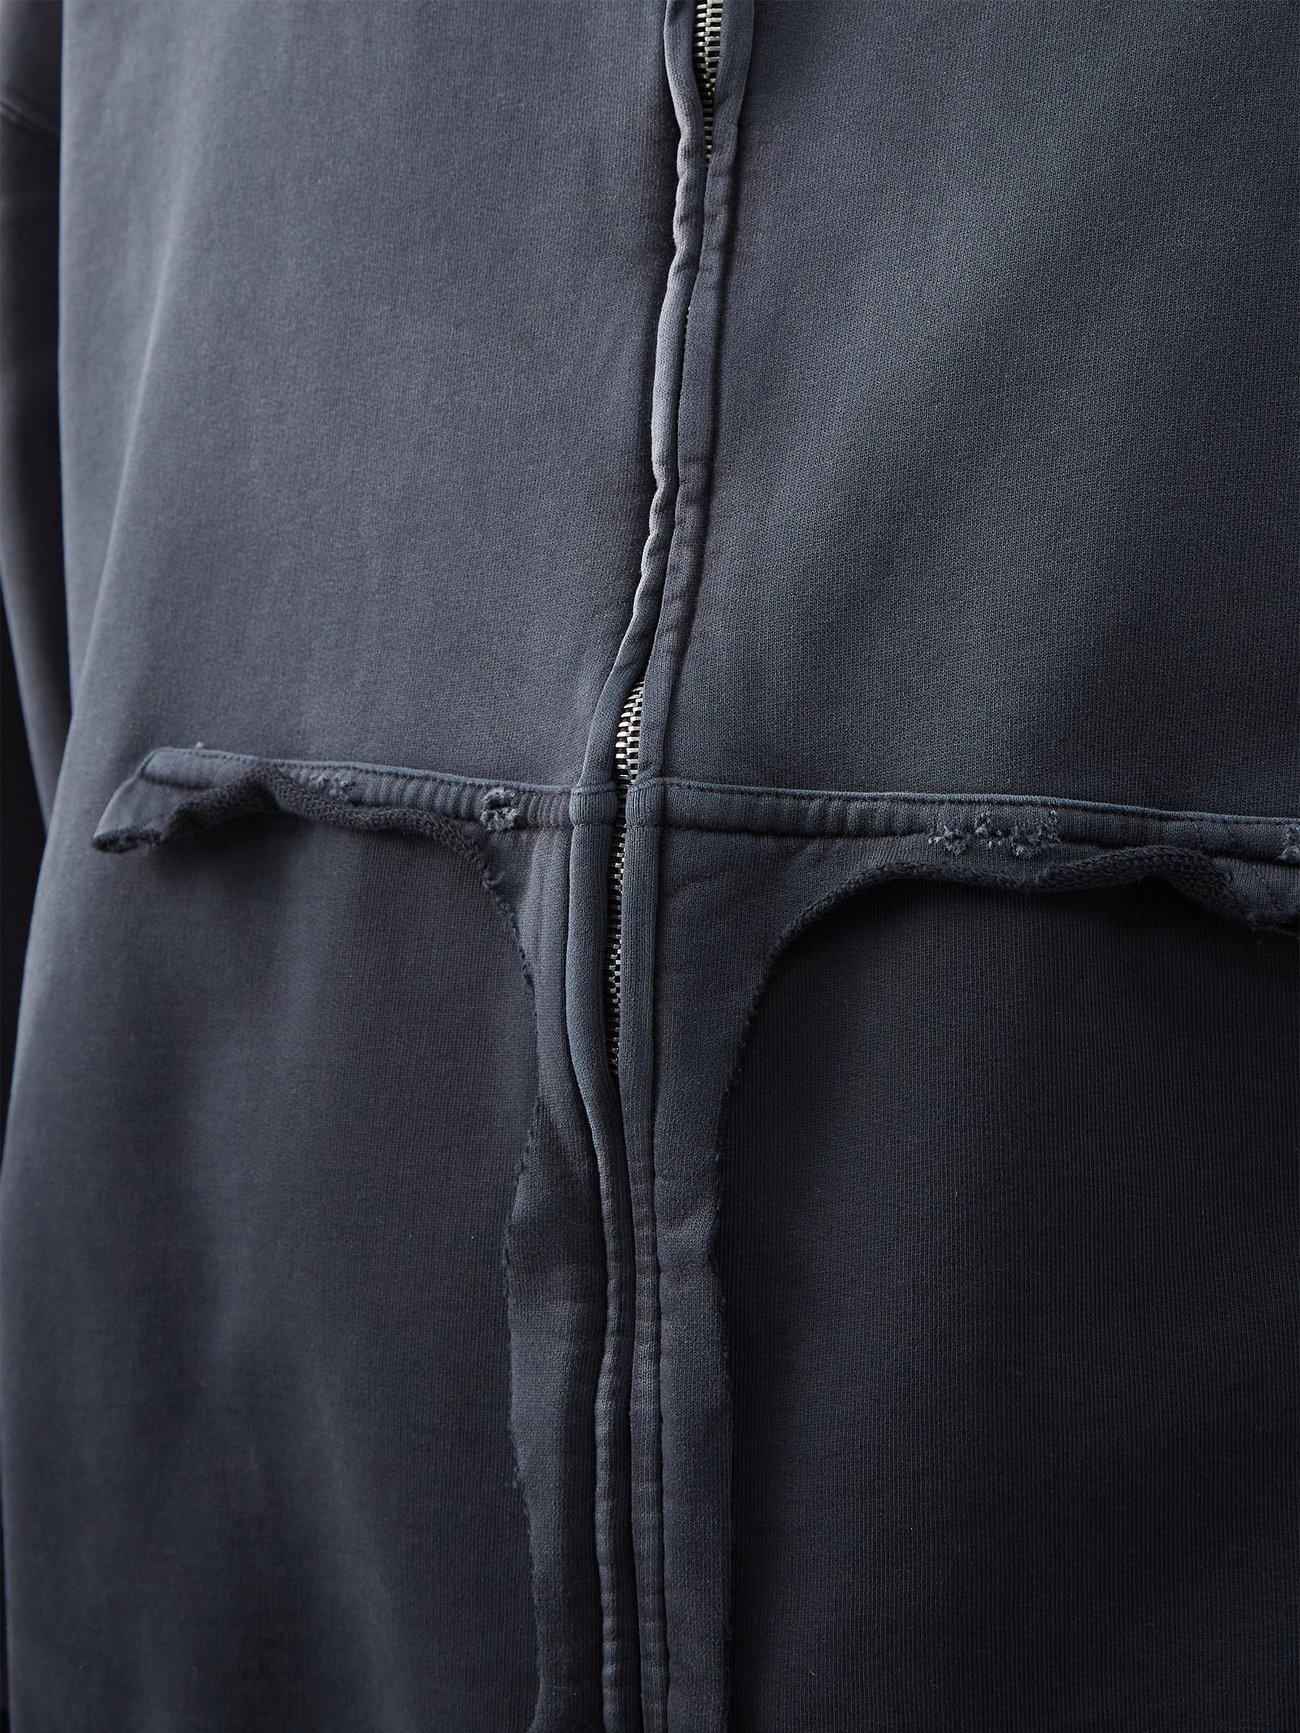 Balenciaga Logo-print Distressed Jersey Hoodie In Black